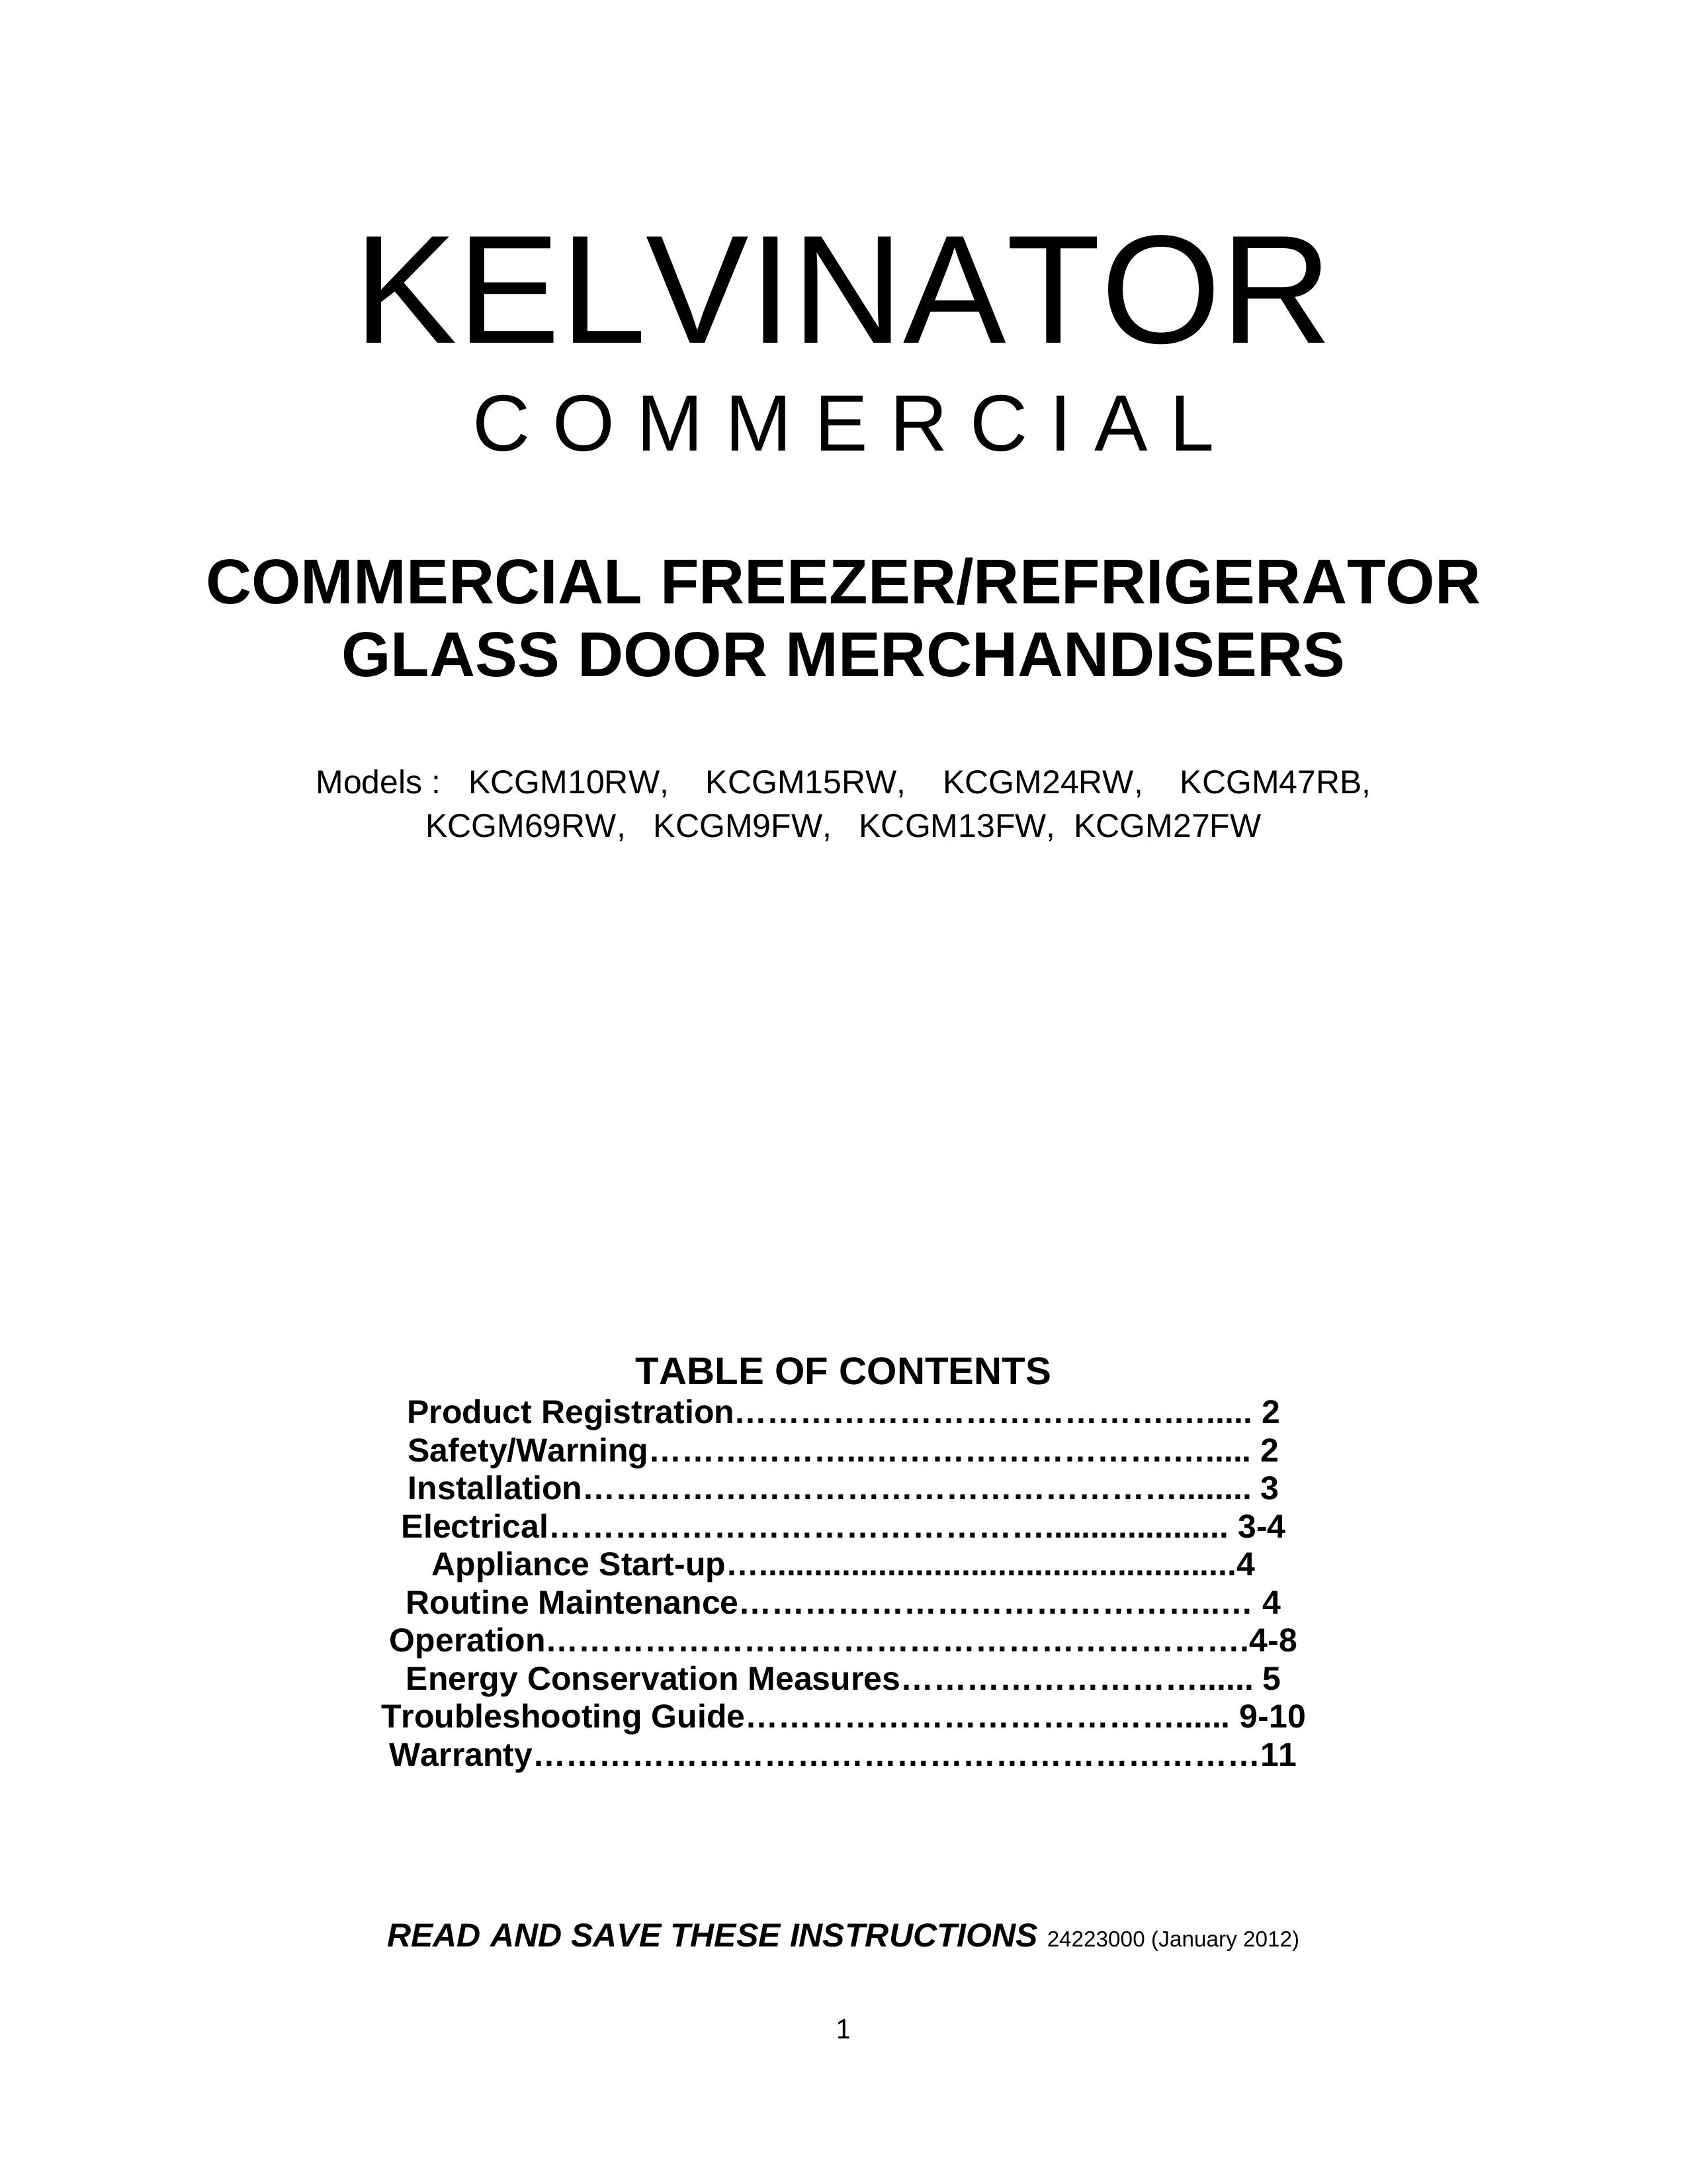 Kelvinator KCGM27FW Refrigerator User Manual